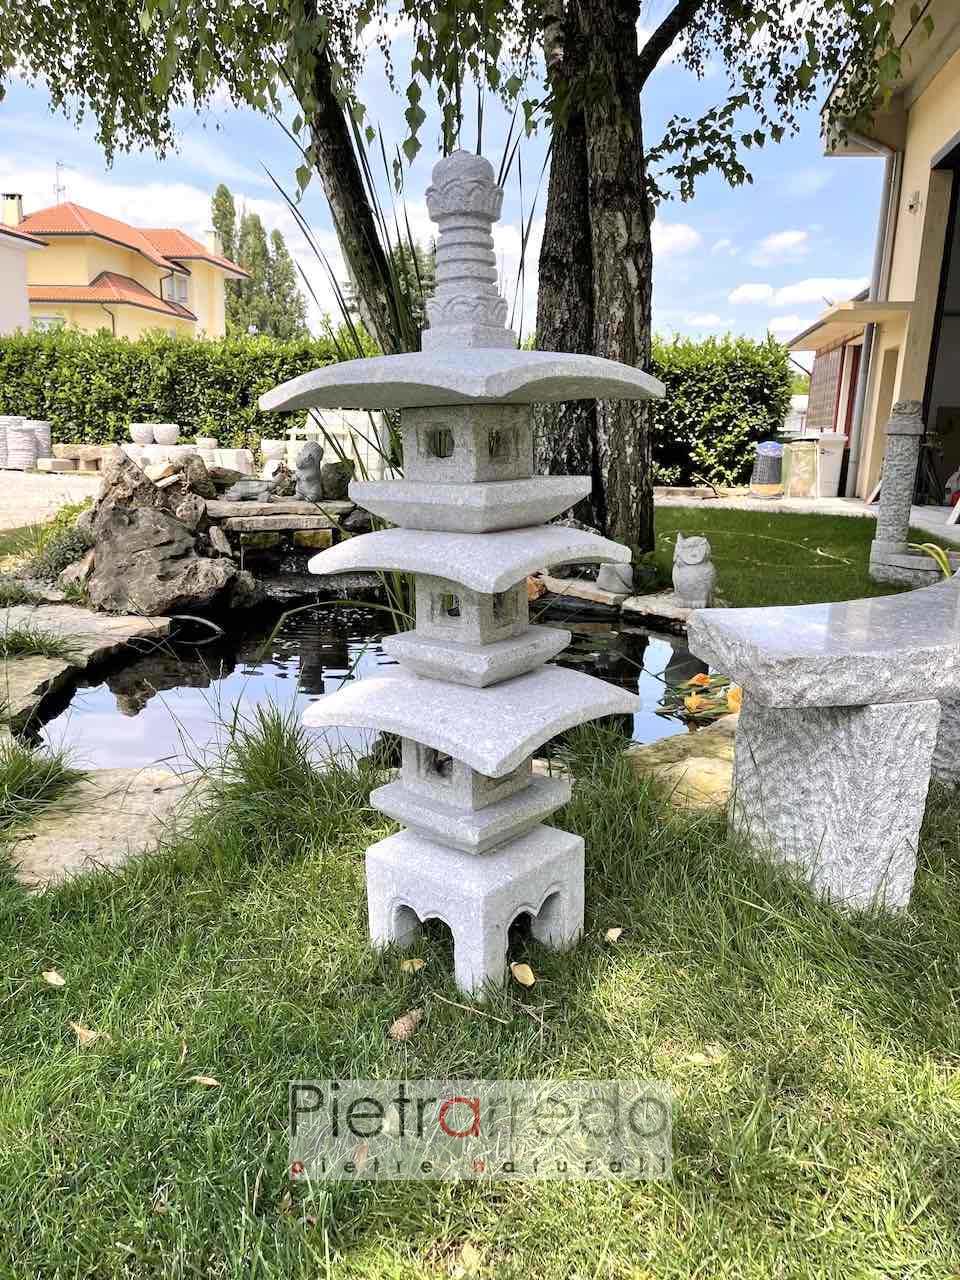 pagoda sanju no to prezzo stone granite garden giardini zen pietrarredo